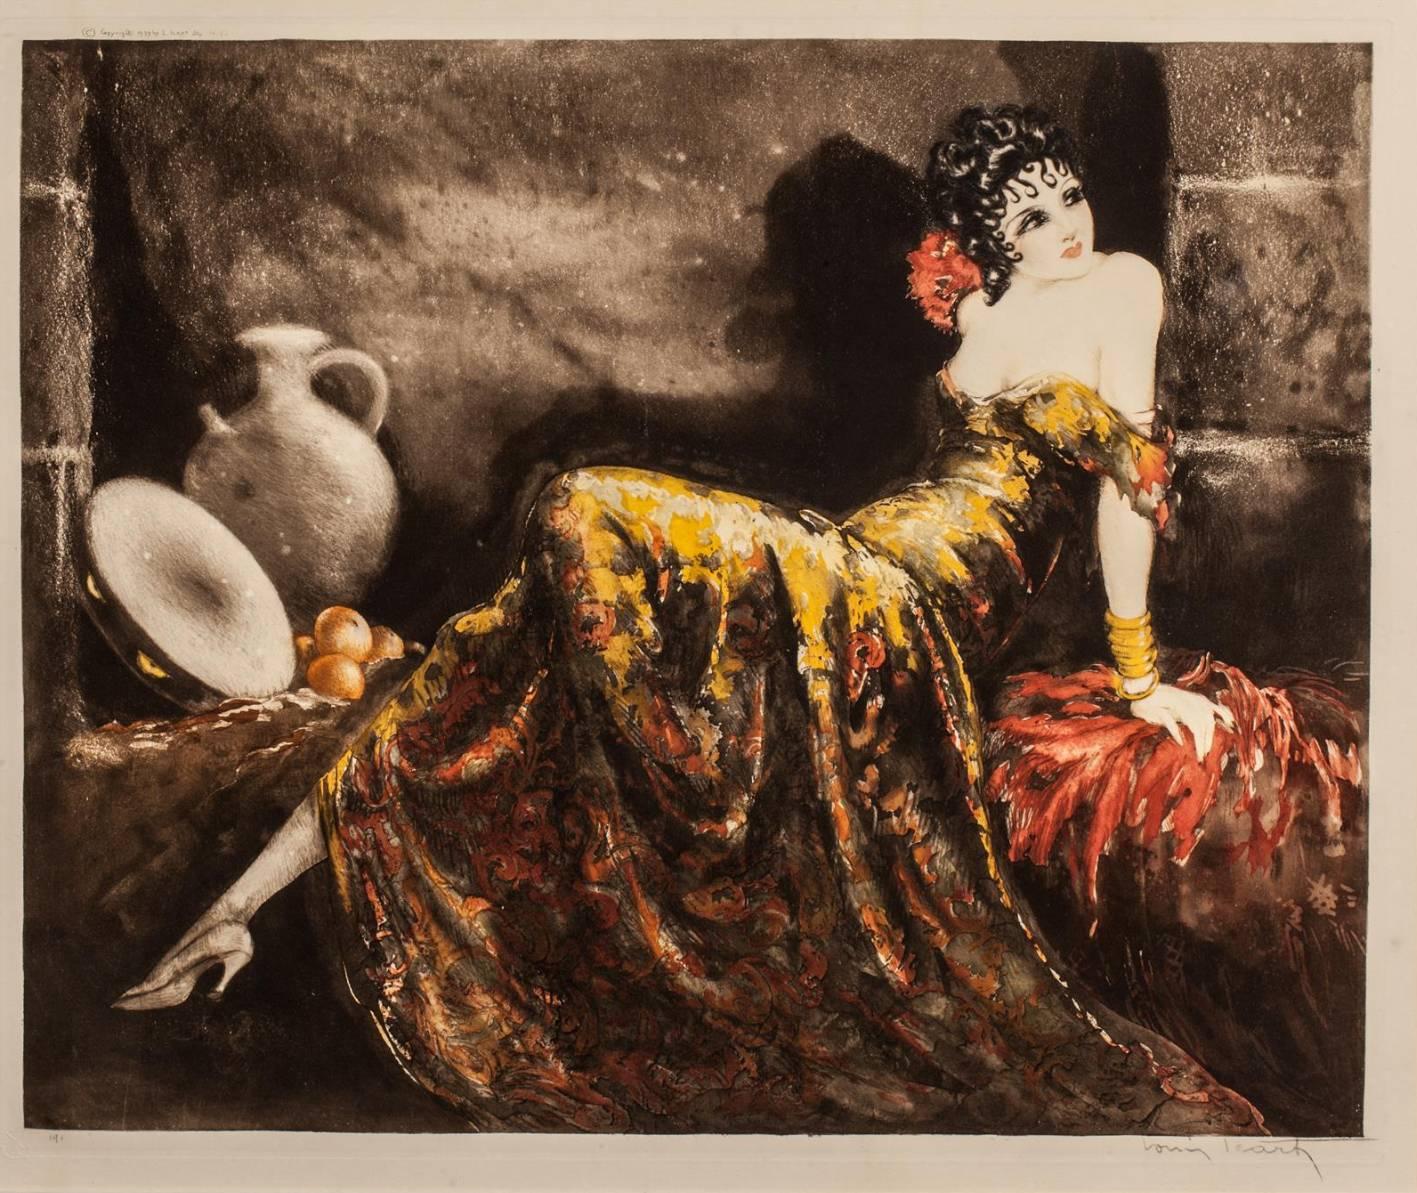 « Gypsy Woman » or « Gay Senorita » - Print by Louis Icart